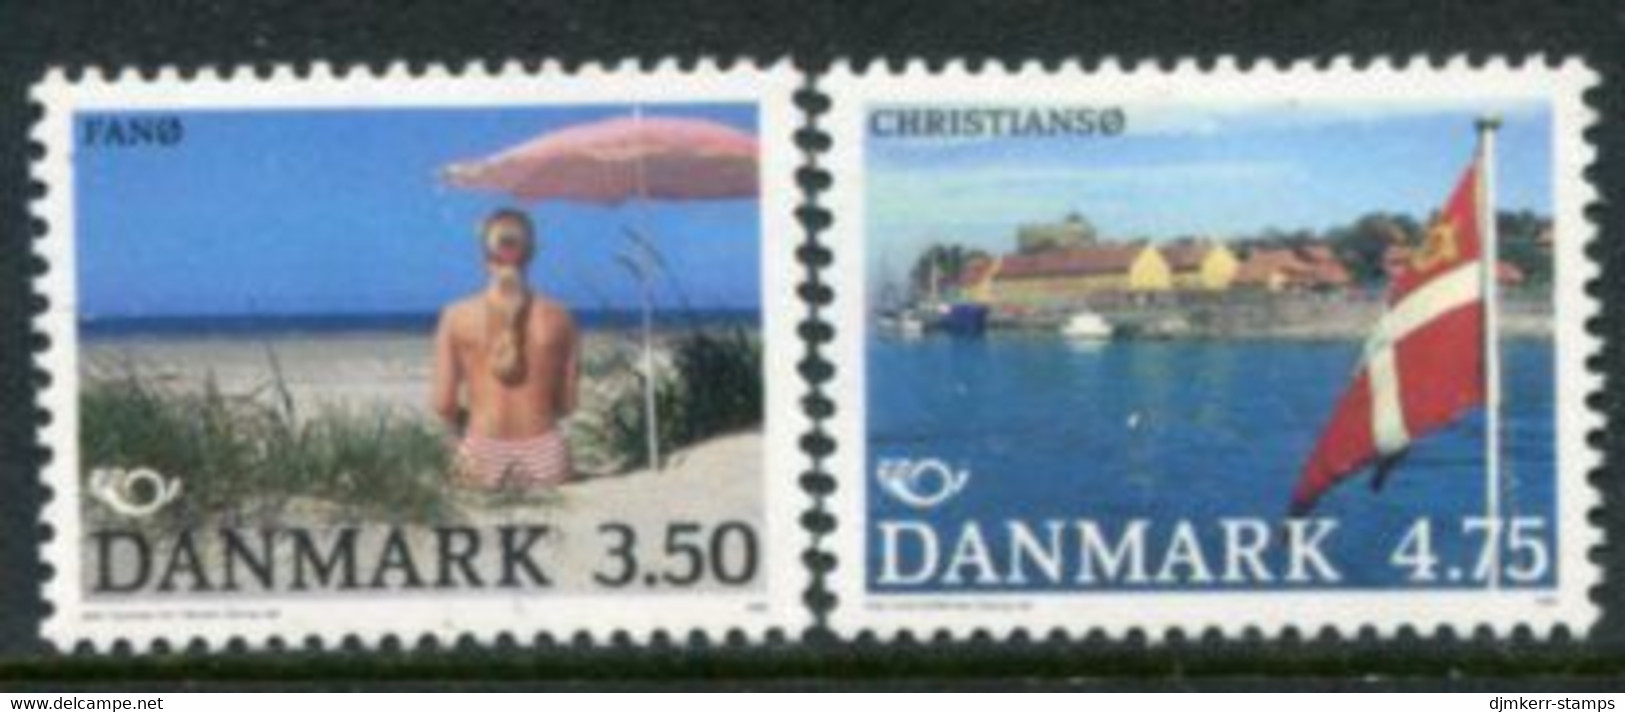 DENMARK 1991 Tourism  MNH / **.   Michel 1003-04 - Nuovi